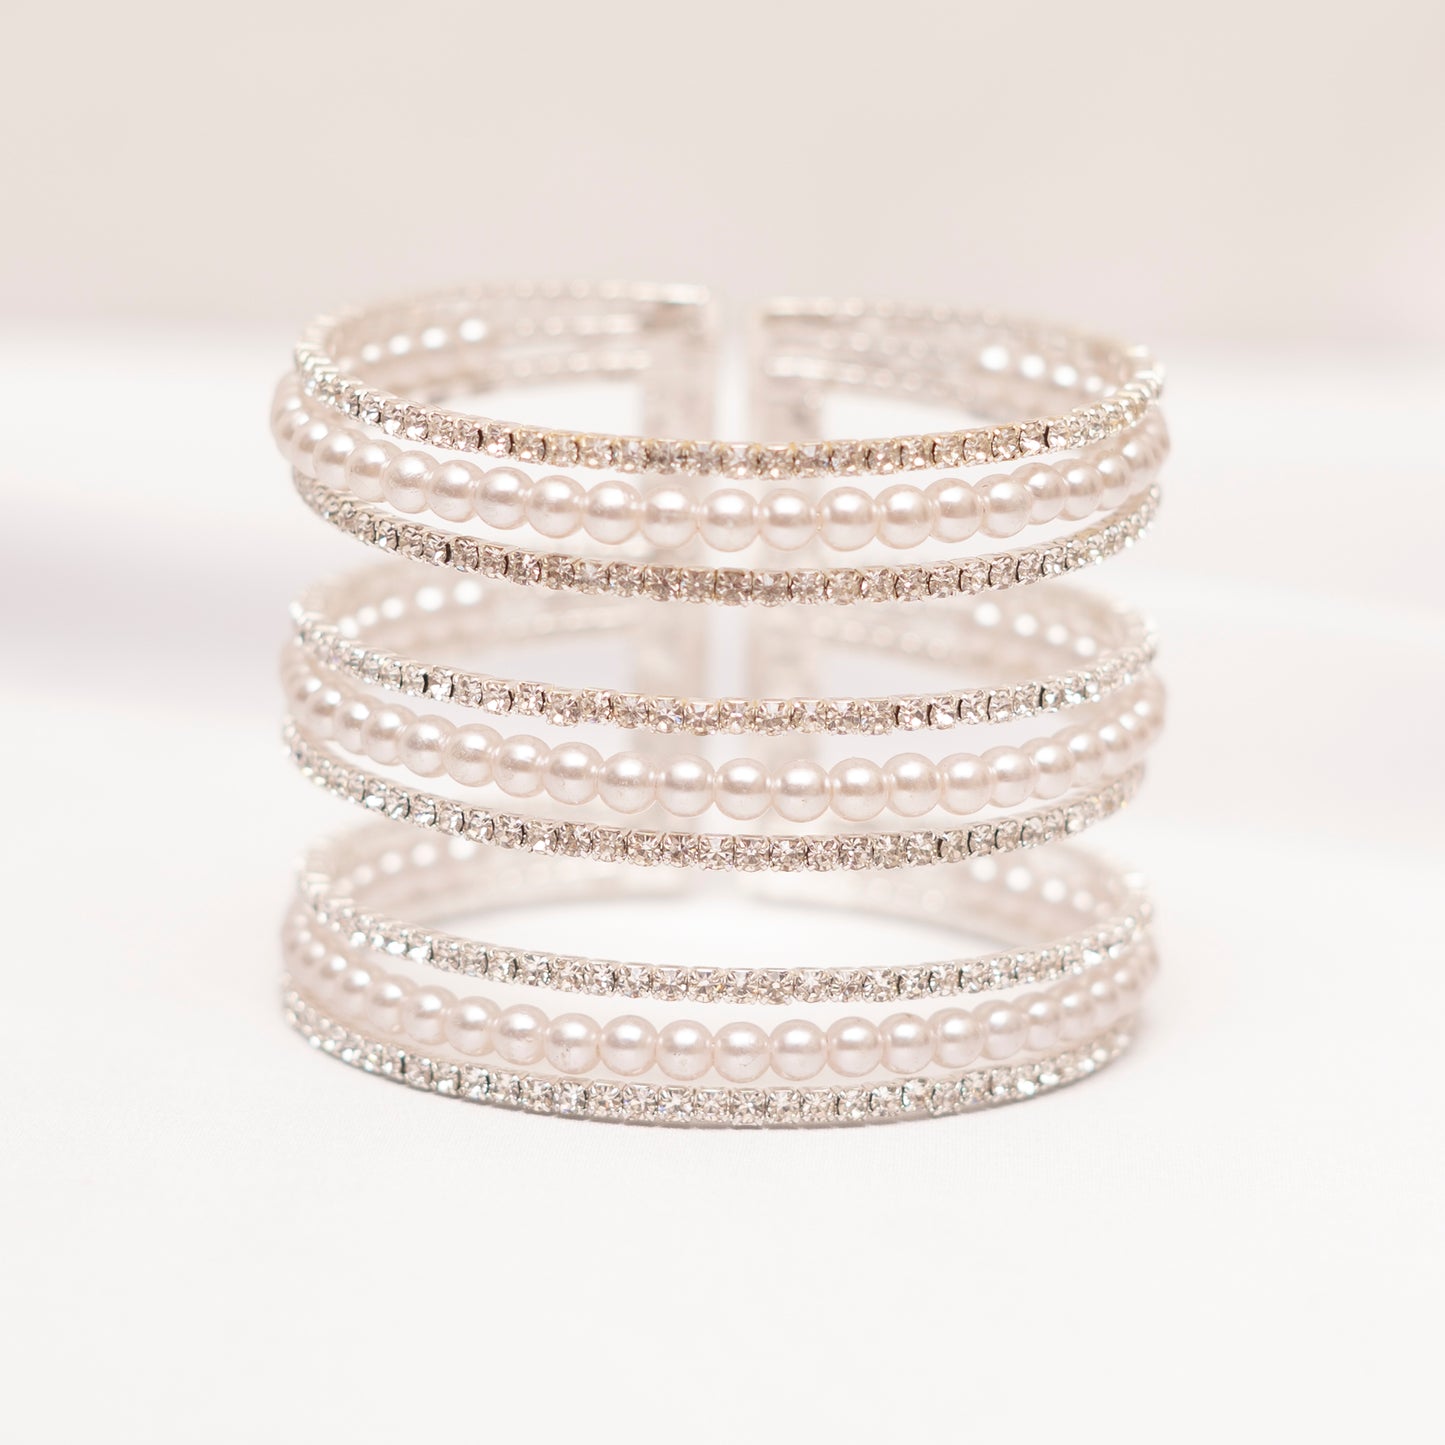 Pearls N Zirconia Bracelet (Adjustable size)